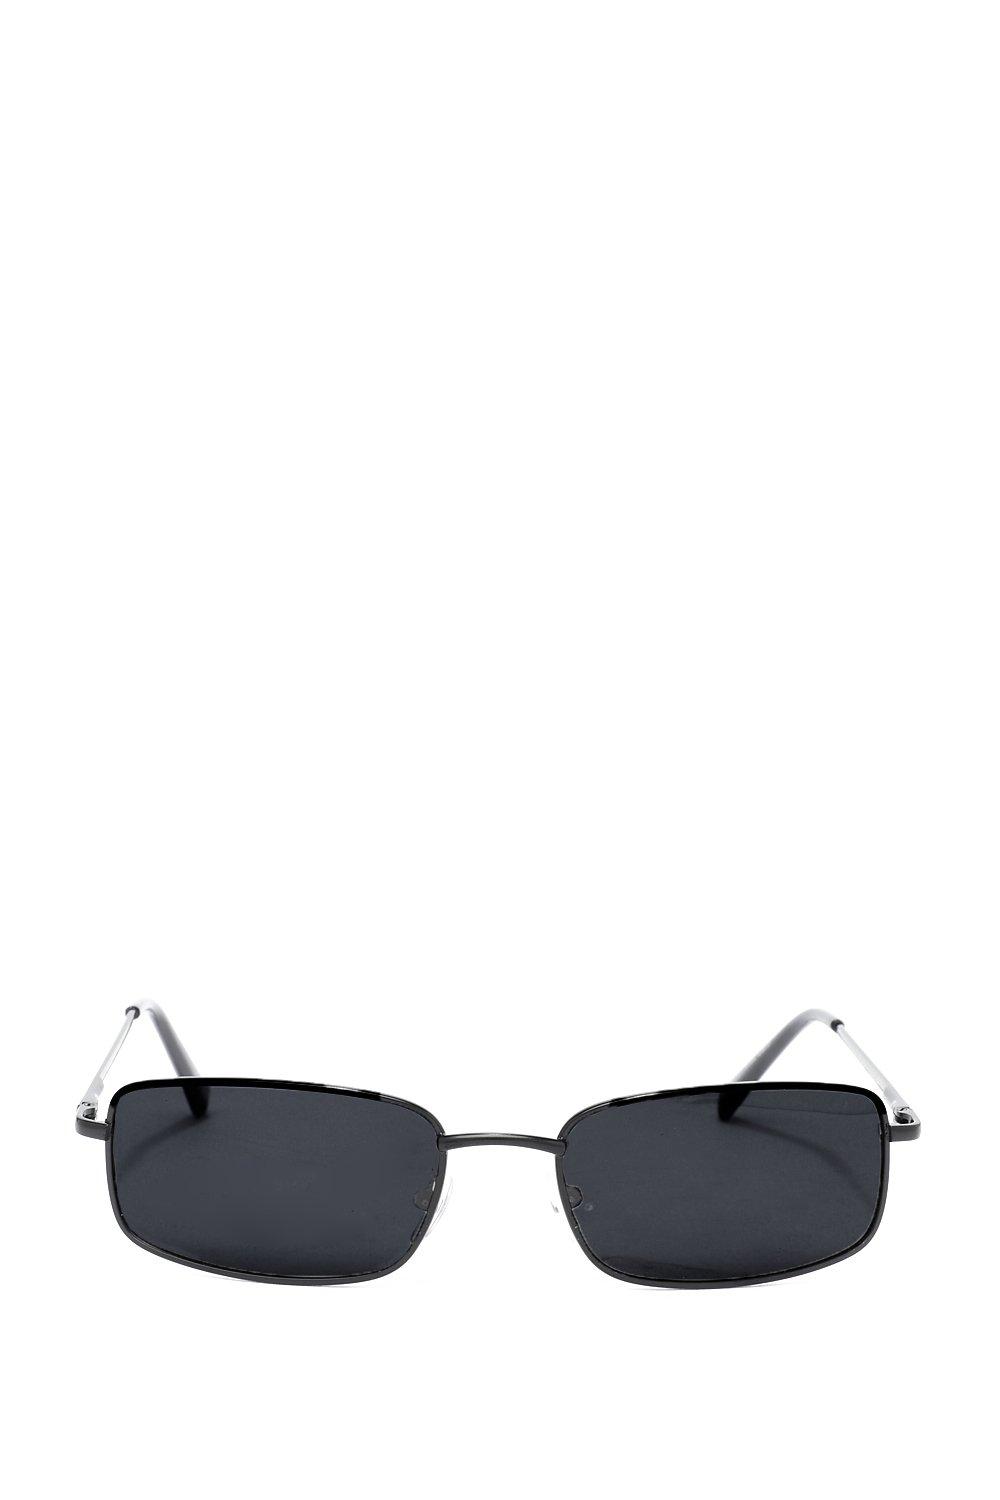 matrix sunglasses